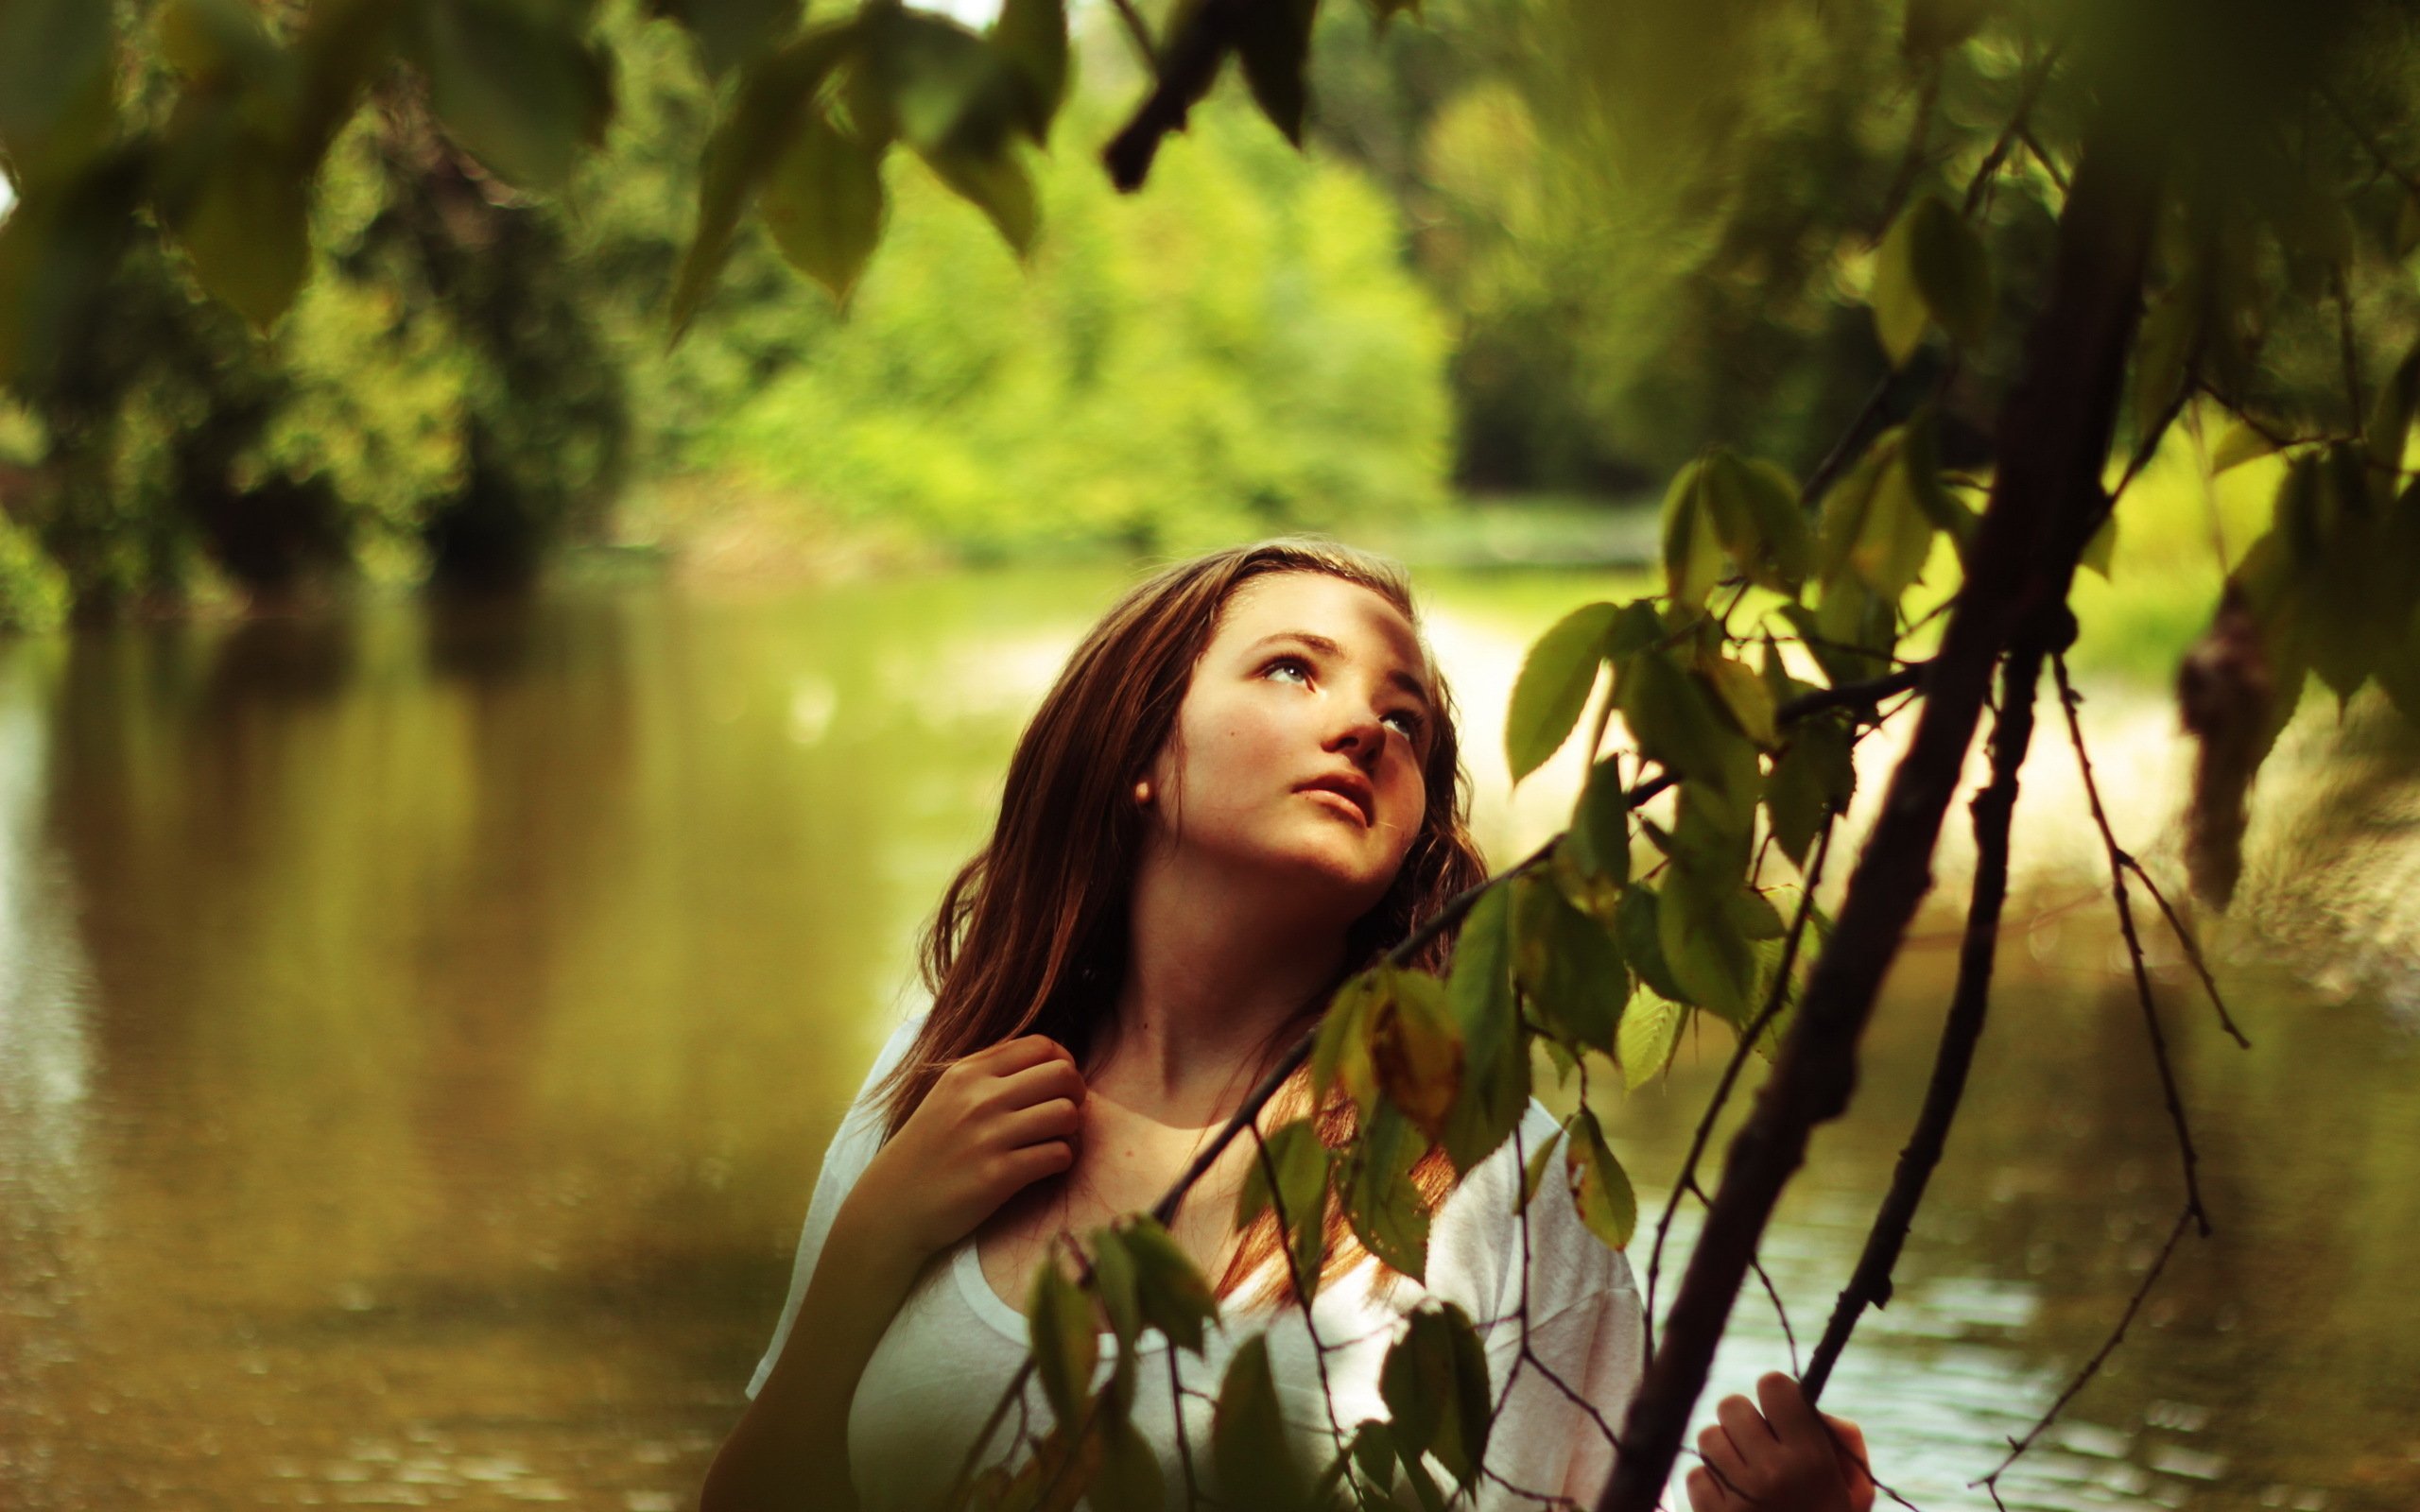 Natural woman video. Девушка у реки. Красивые девушки у реки. Красивые девушки на фоне природы. Женщина на природе.